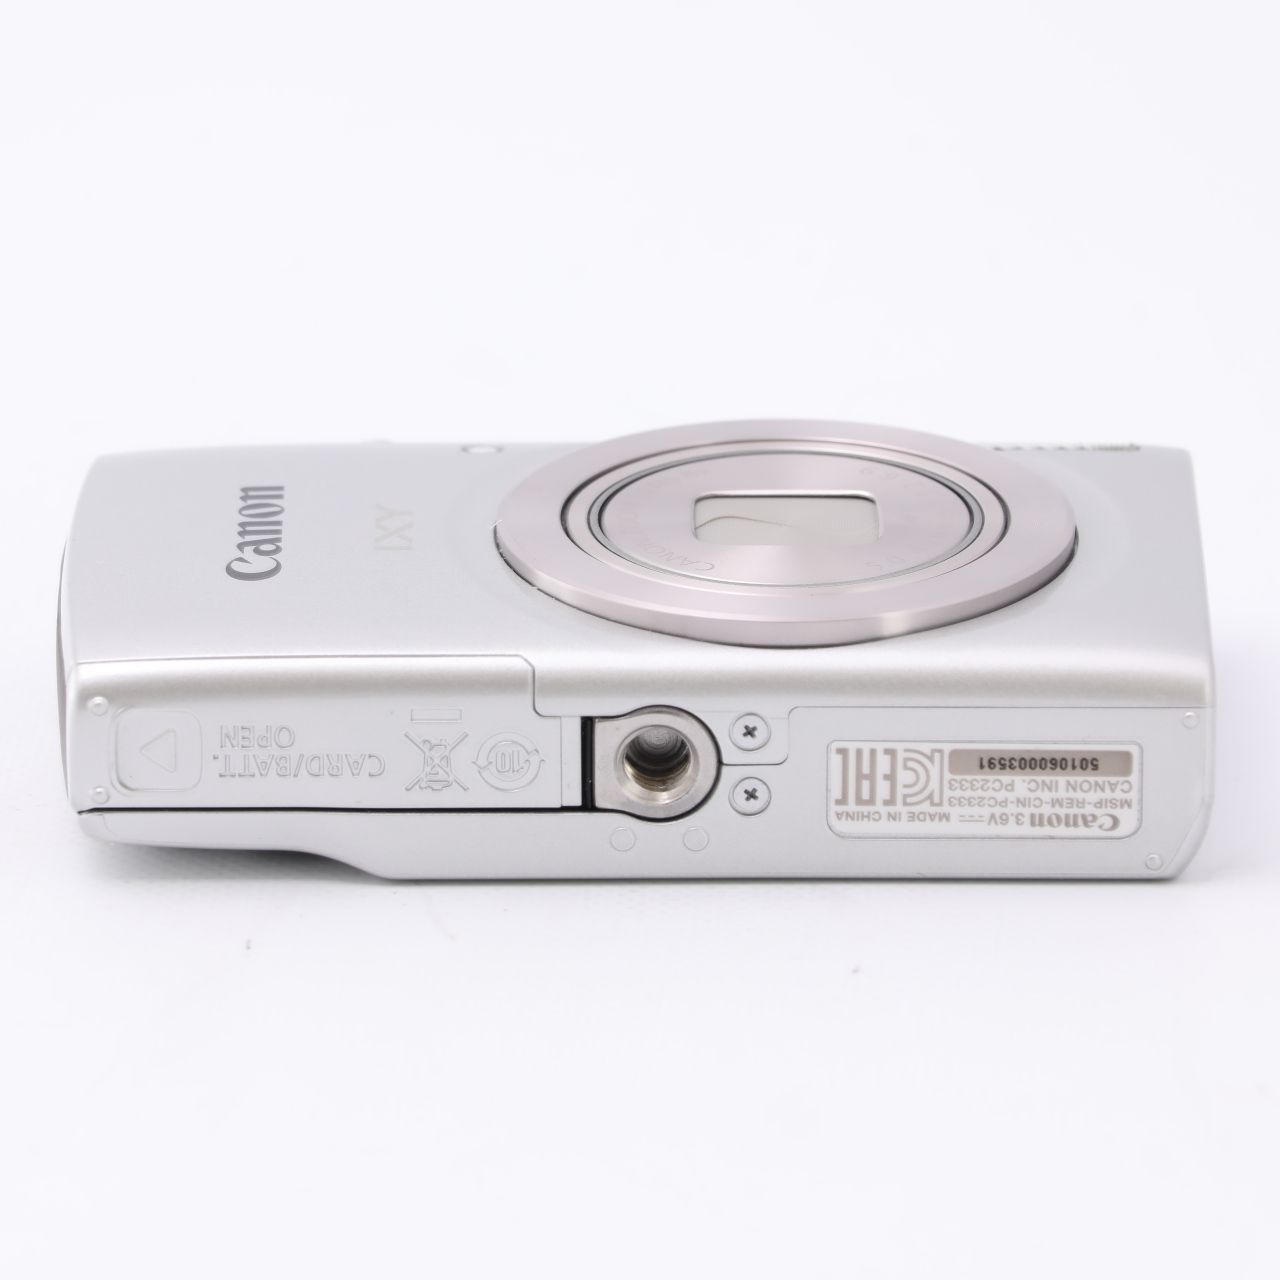 Canon IXY 200 PC2333 ジャンク品 - デジタルカメラ